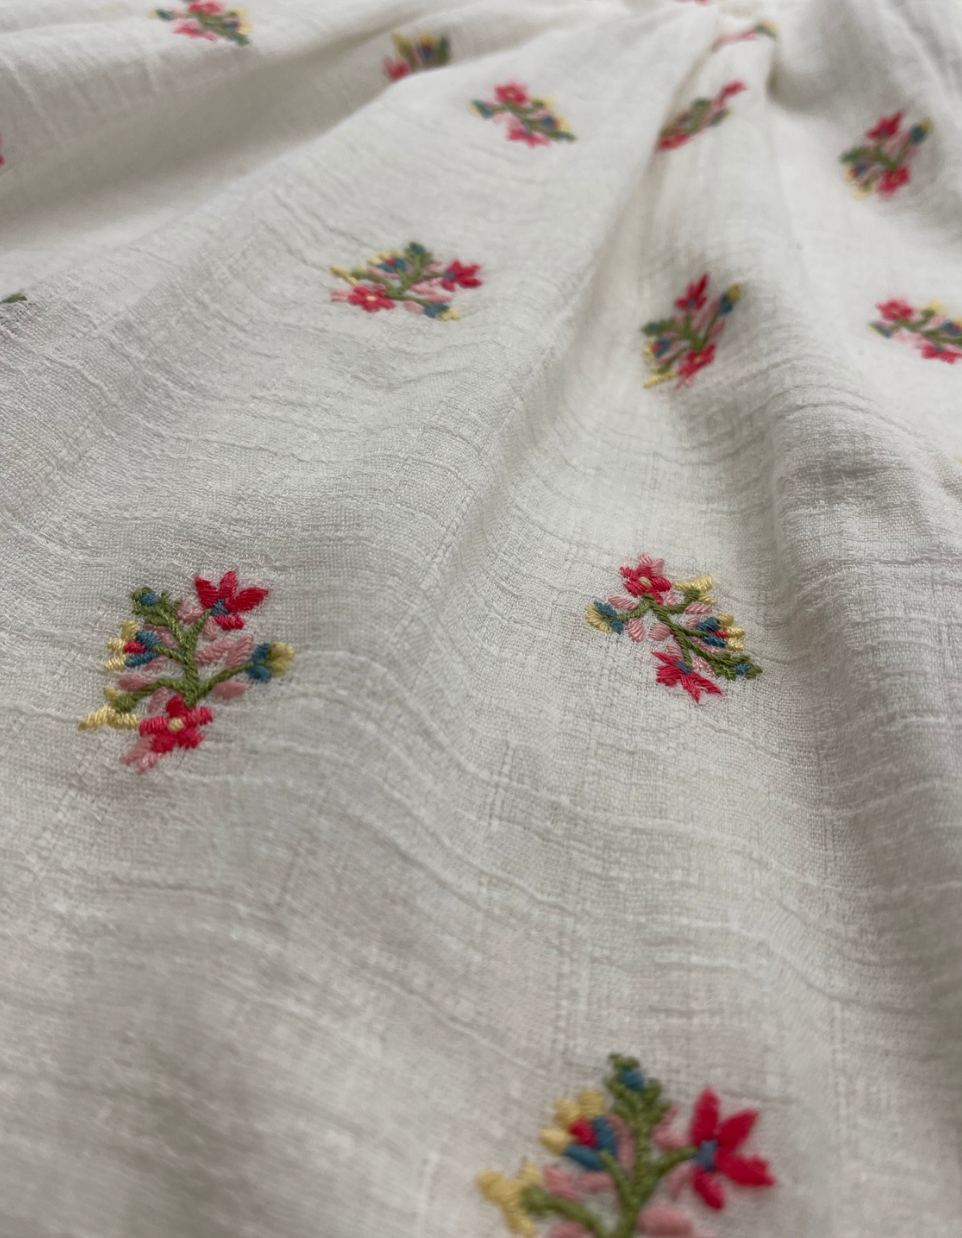 LOUISE MISHA - Robe blanche brodée fleurs - 7 ans